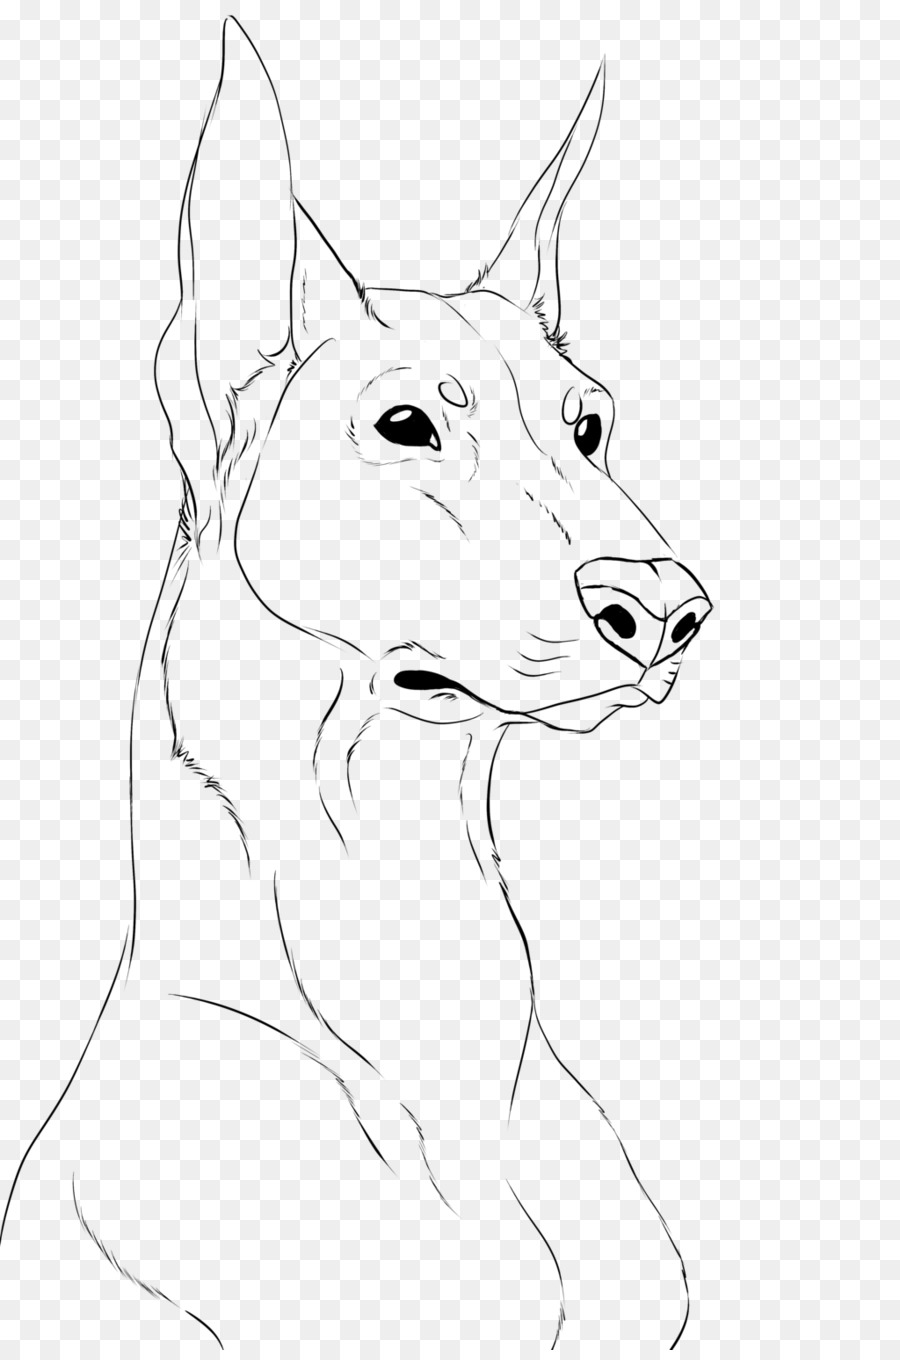 Dobermann German Shepherd Drawing Line art Sketch - taobao / lynx design png download - 1024*1536 - Free Transparent Dobermann png Download.